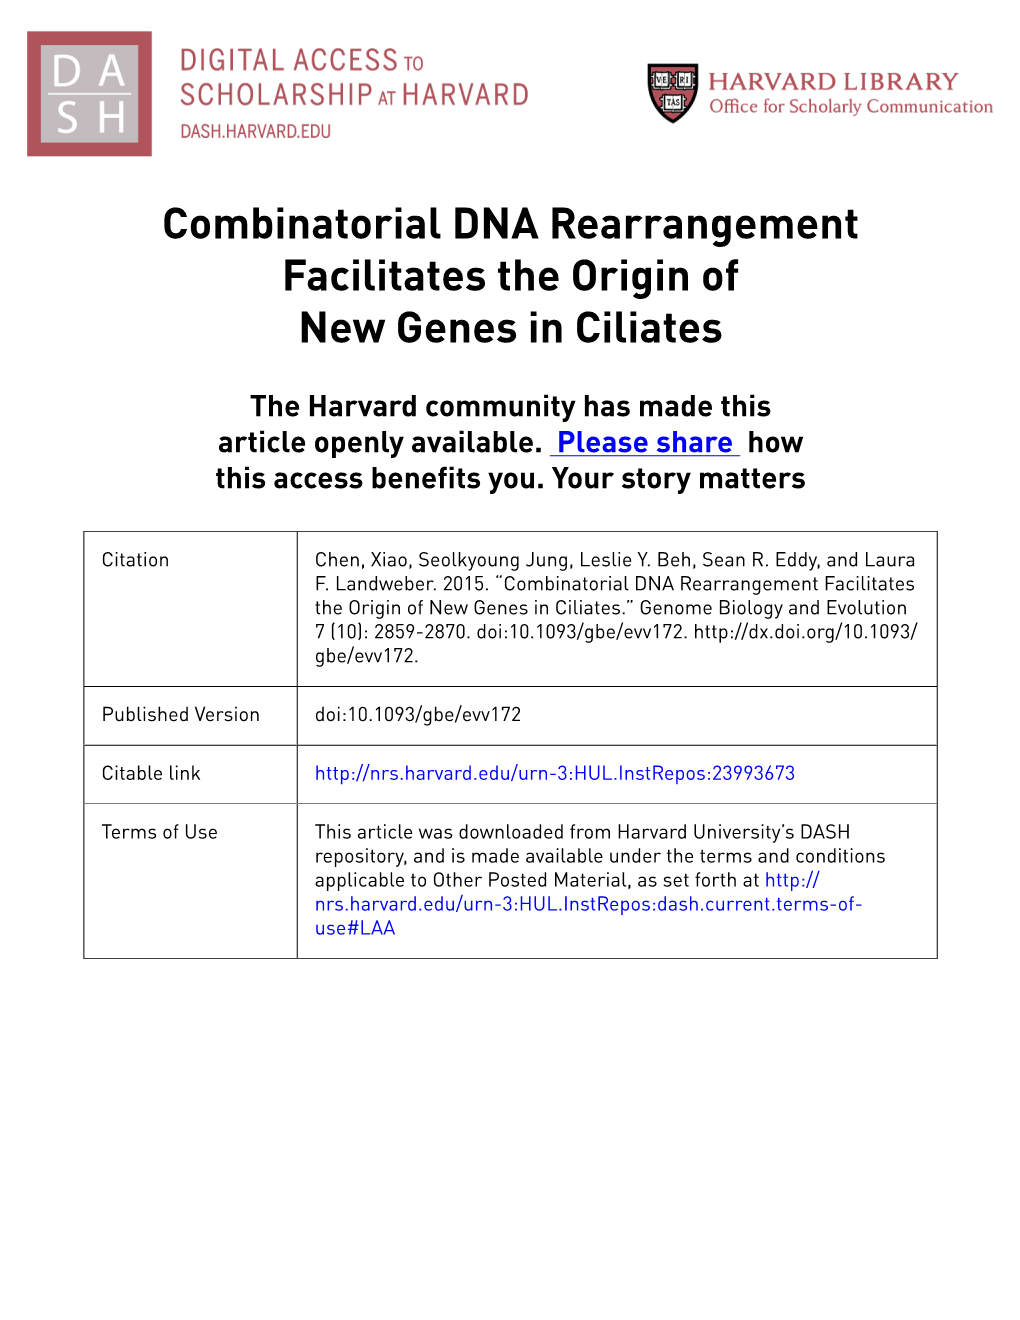 Combinatorial DNA Rearrangement Facilitates the Origin of New Genes in Ciliates